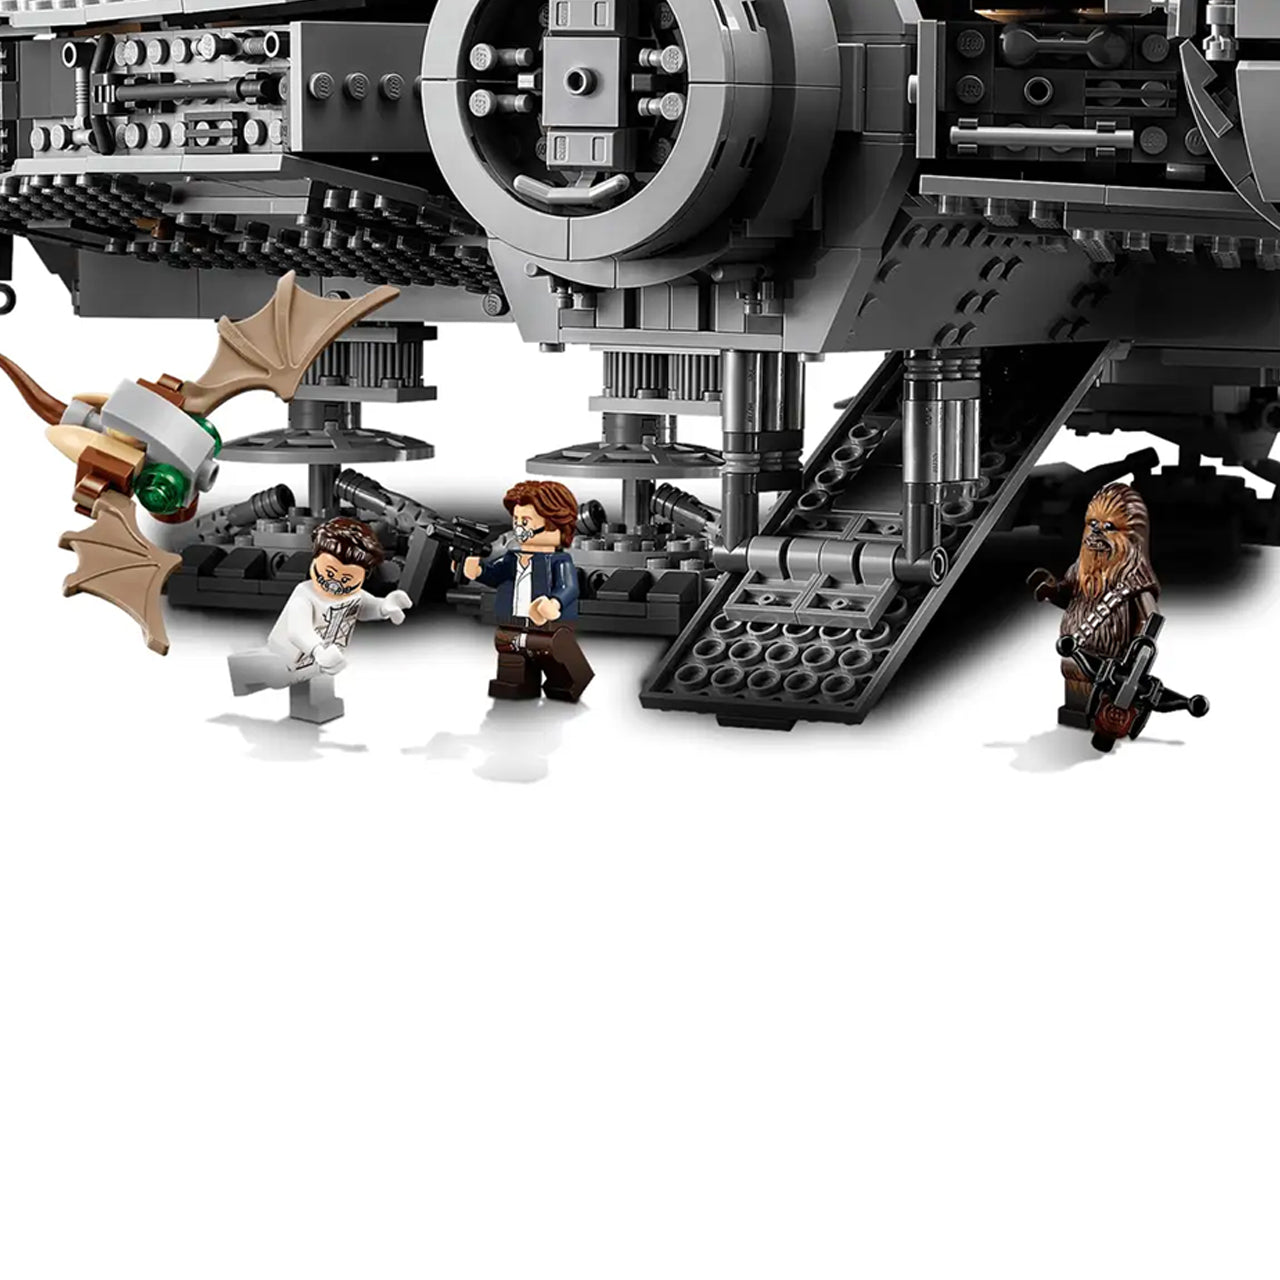 LEGO UCS Millennium Falcon